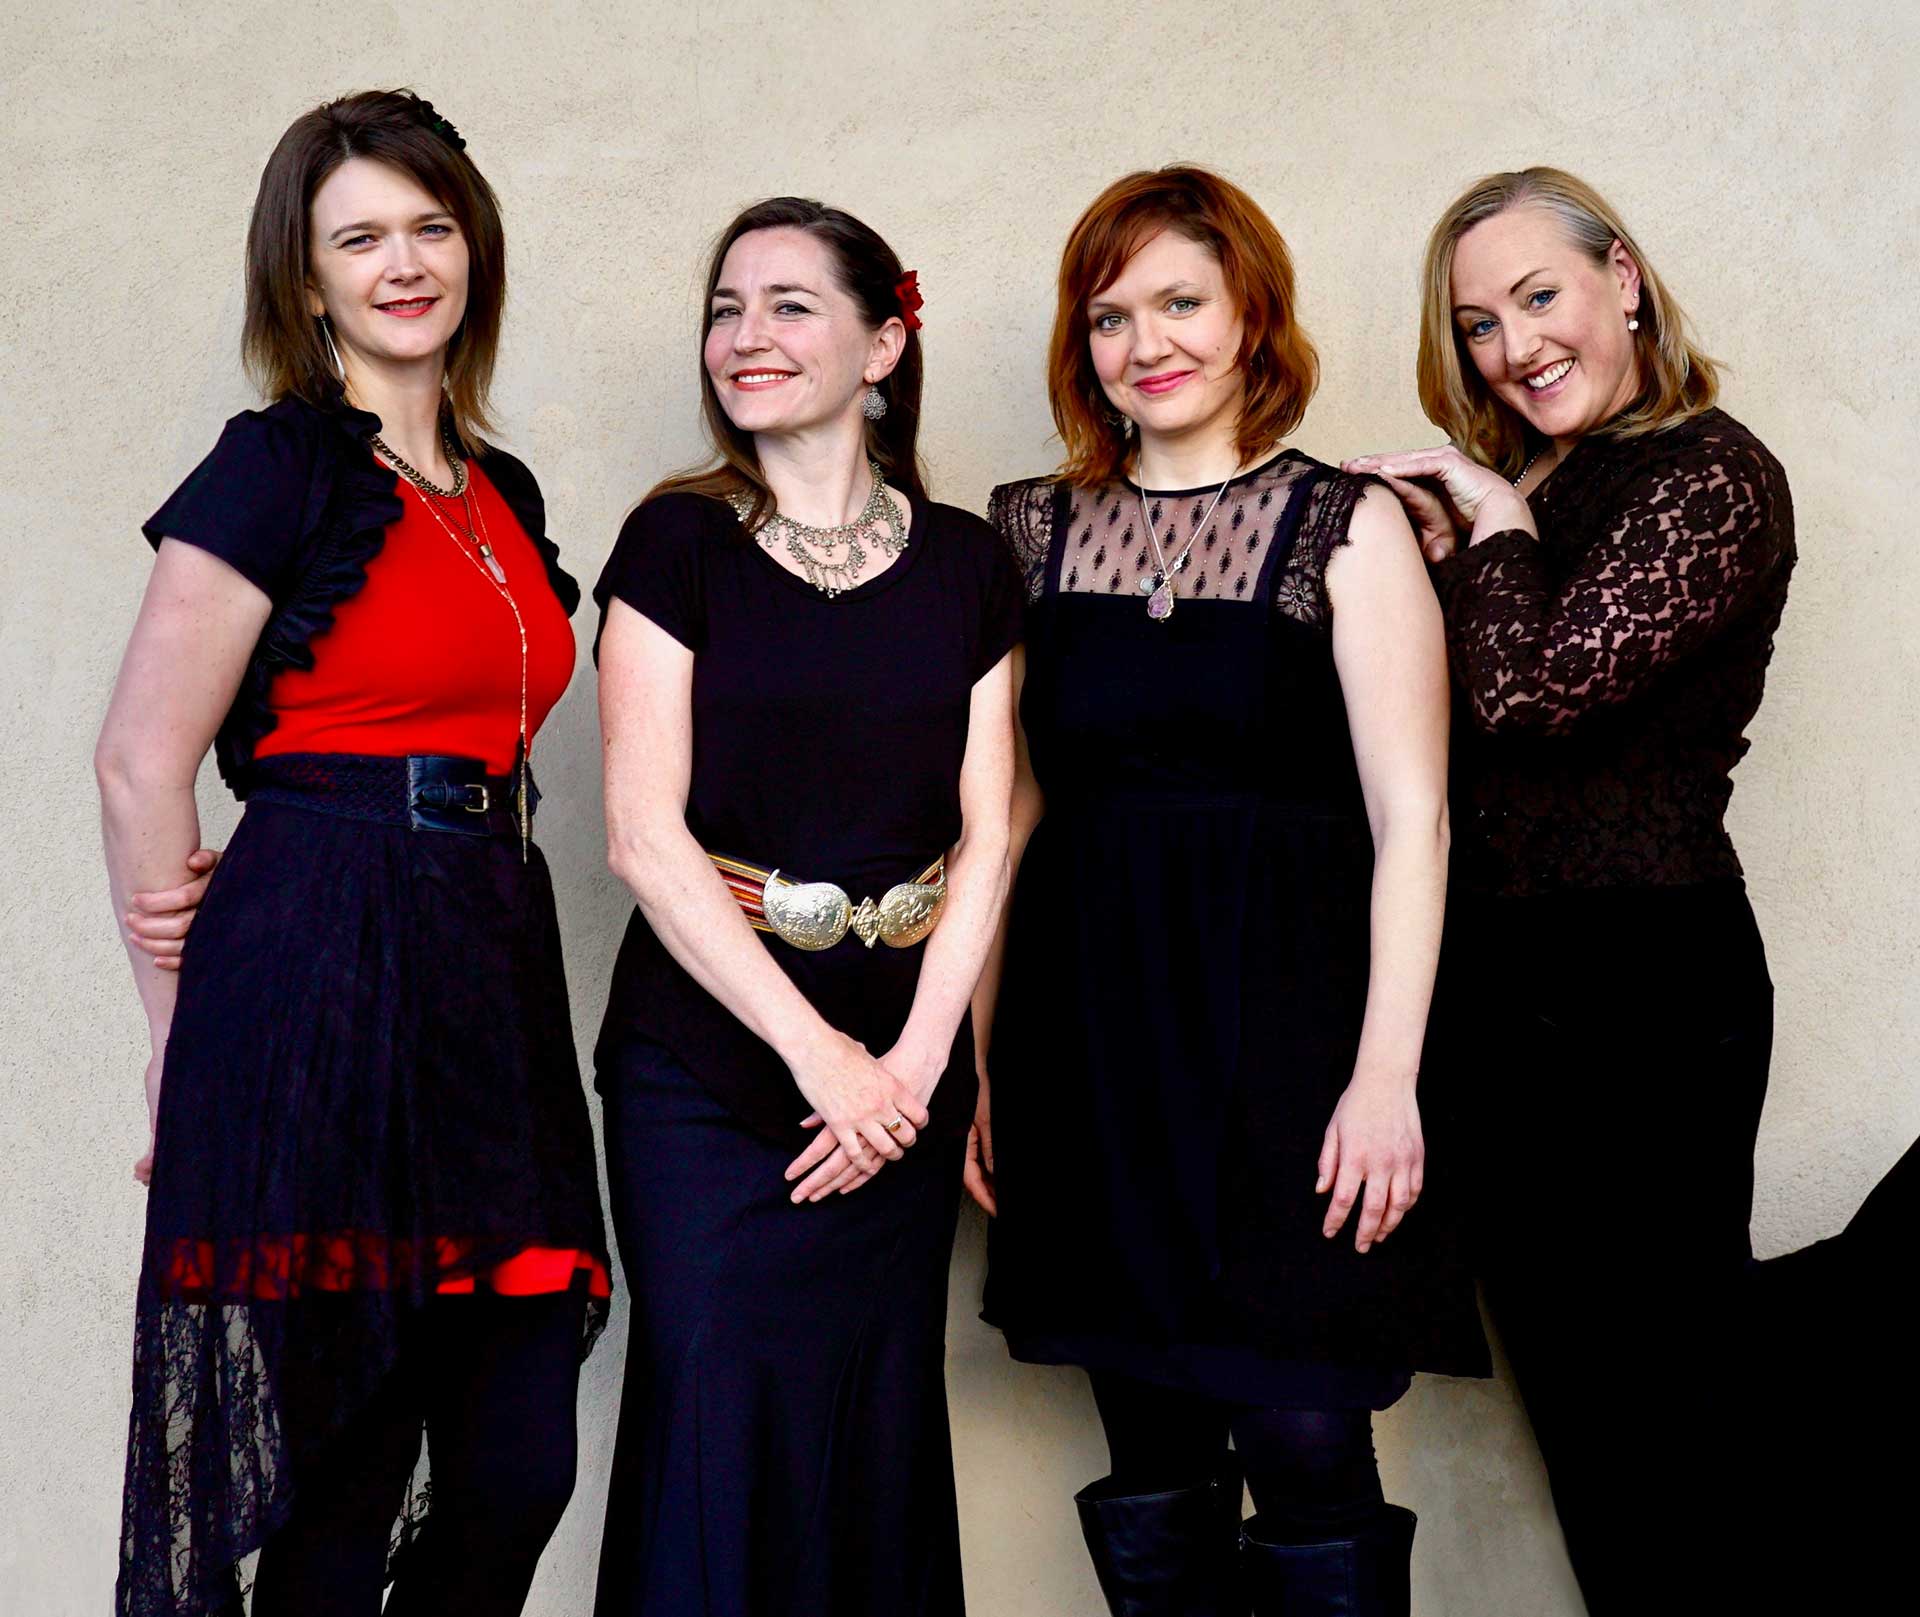 Rumelia Collective is (from left to right) Nicolle Jensen, Willa Roberts, Alysha Shaw, and Sitara Schauer